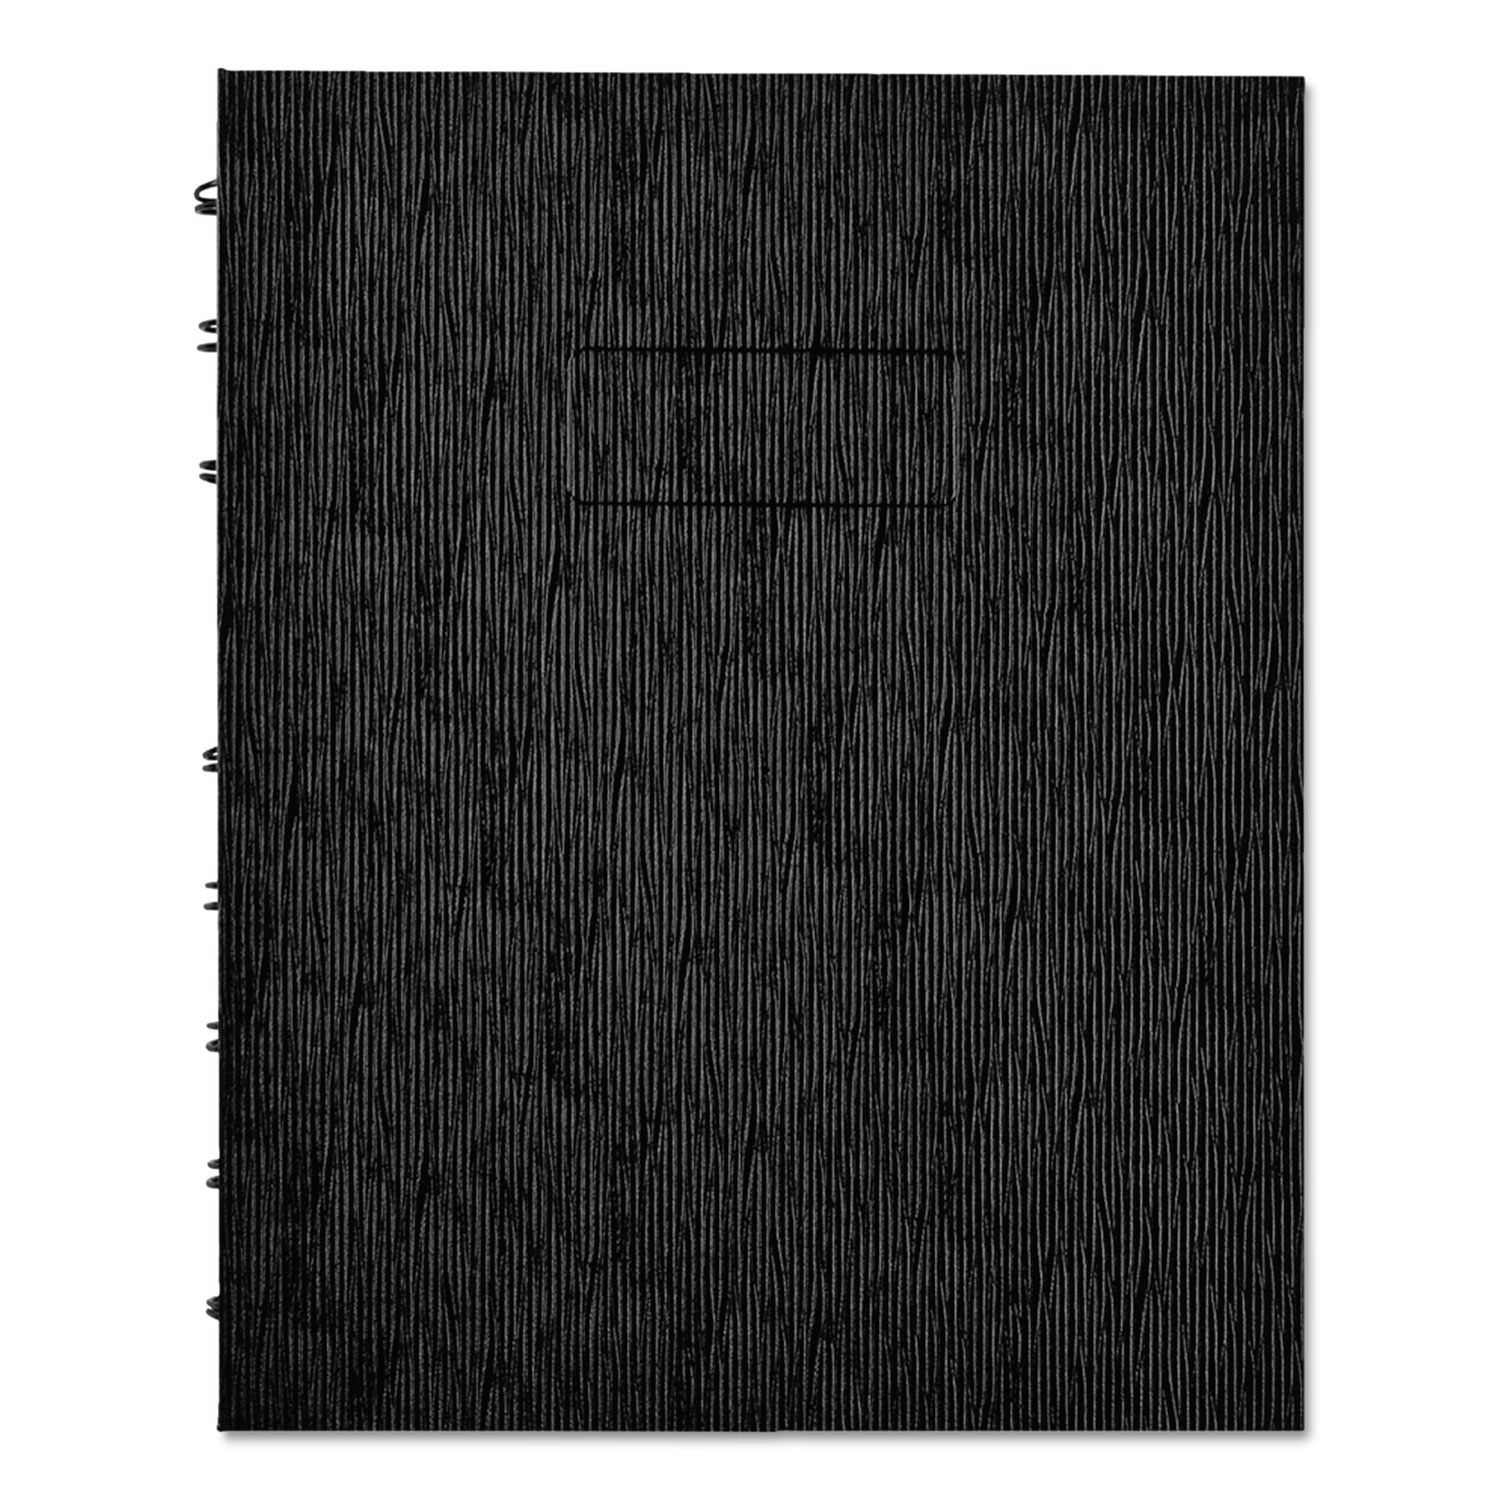  Blueline A7150E.BLK EcoLogix NotePro Notebook, Medium/College Rule, Black Cover, 9.25 x 7.25, 75 Sheets (REDA7150EBLK) 